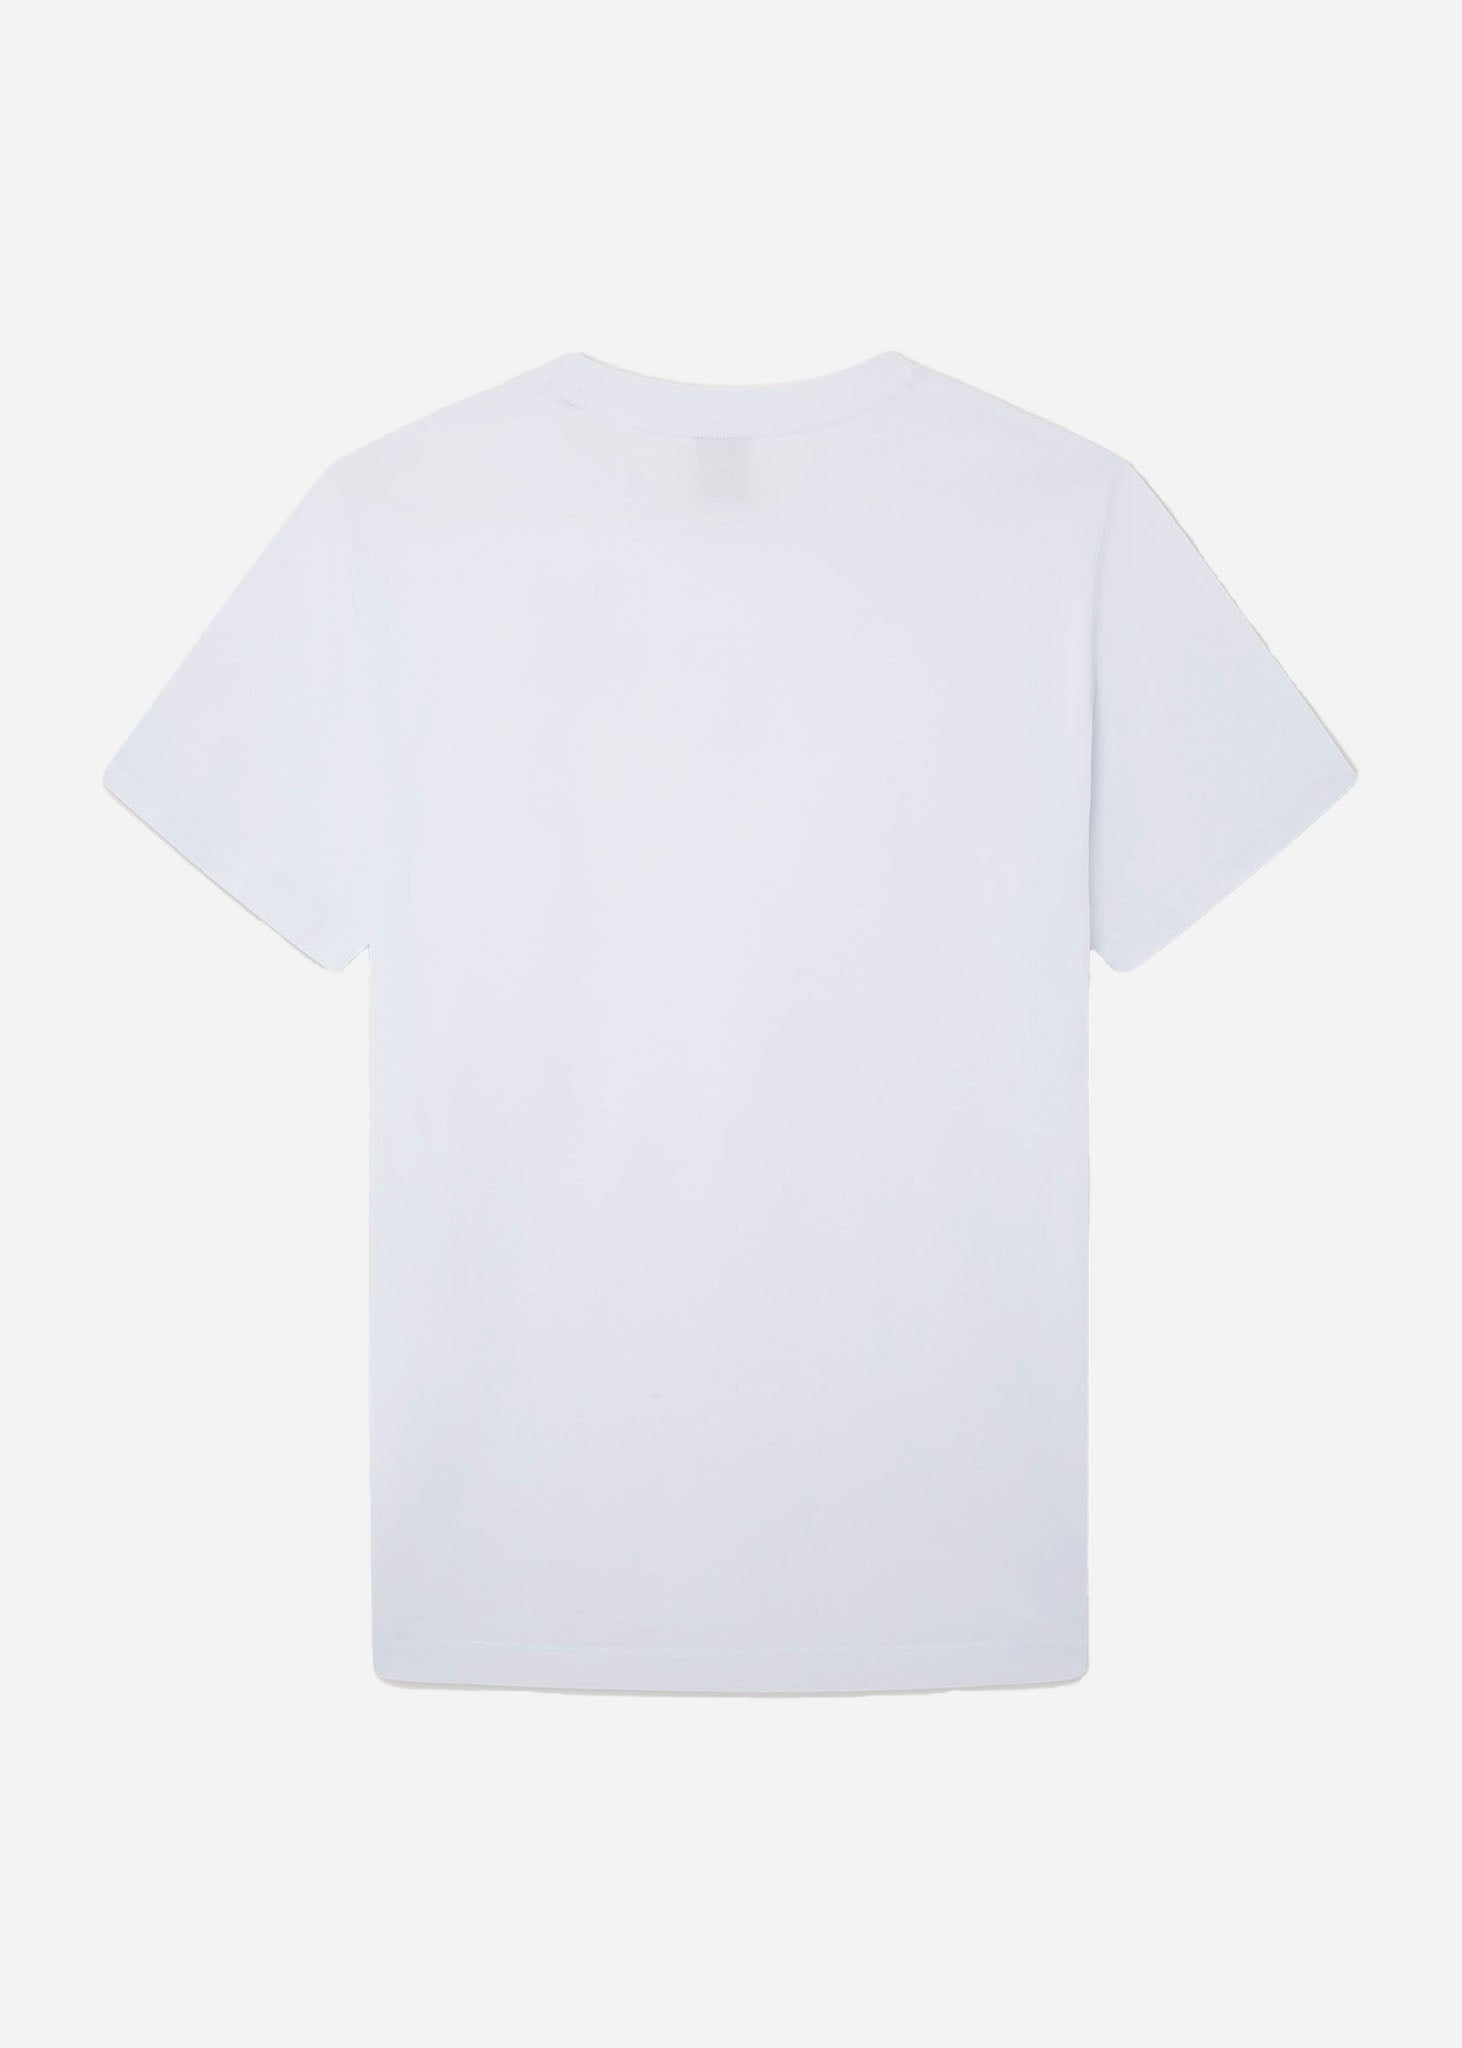 Hackett London T-shirts  Essential tee - white navy 